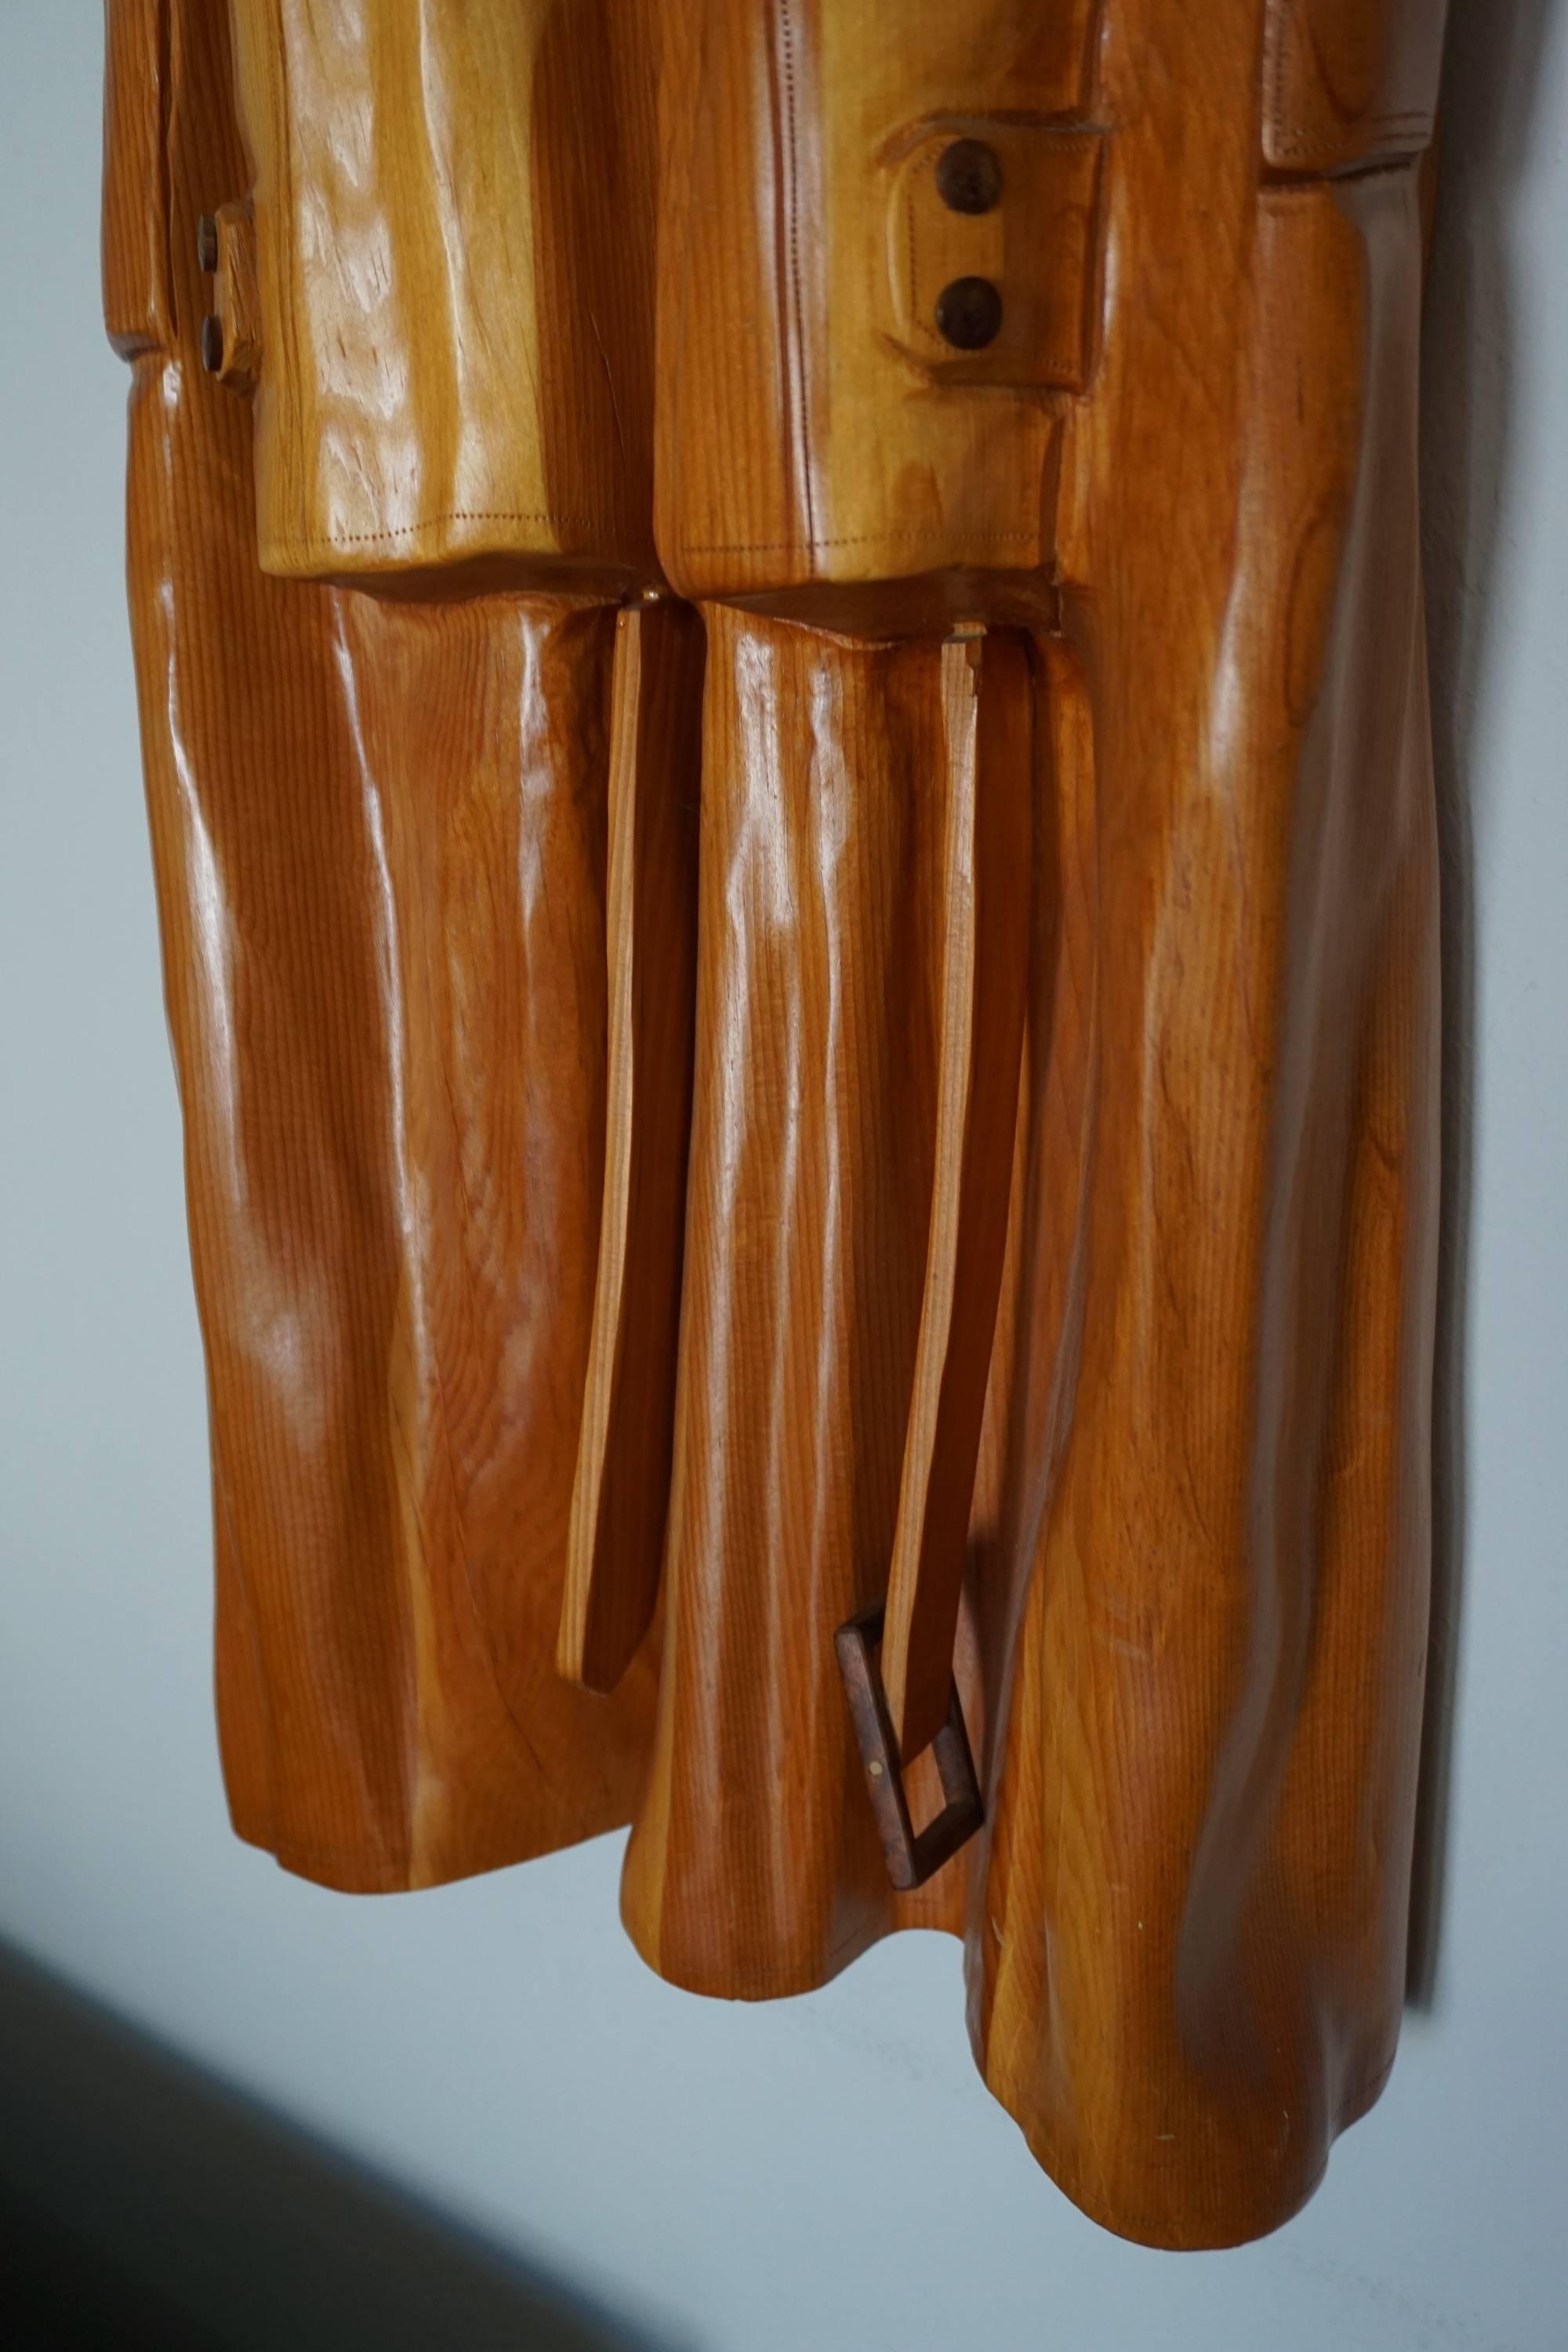 American Pop Art Raincoat Sculpture by Rene Megroz For Sale